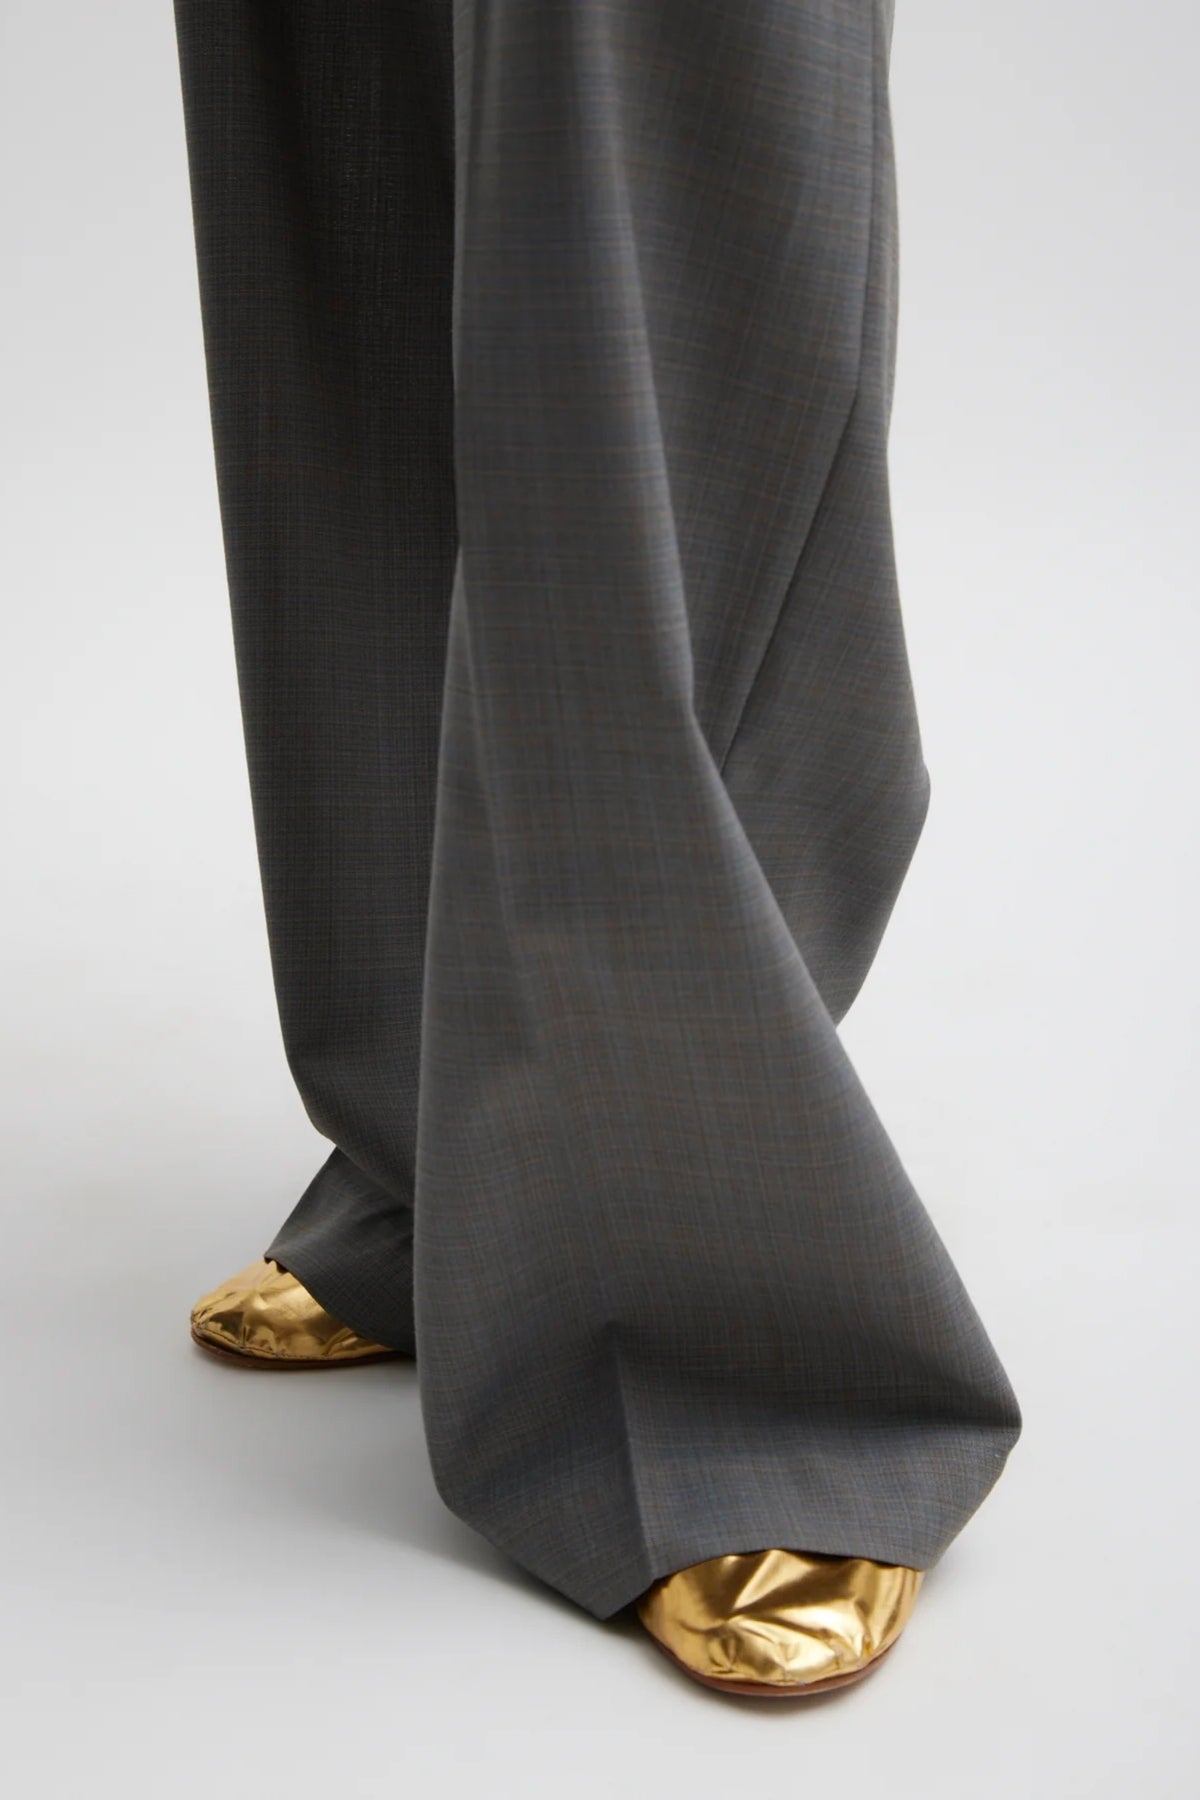 Tibi Grant Suiting Fold Over Trouser - Grey Multi